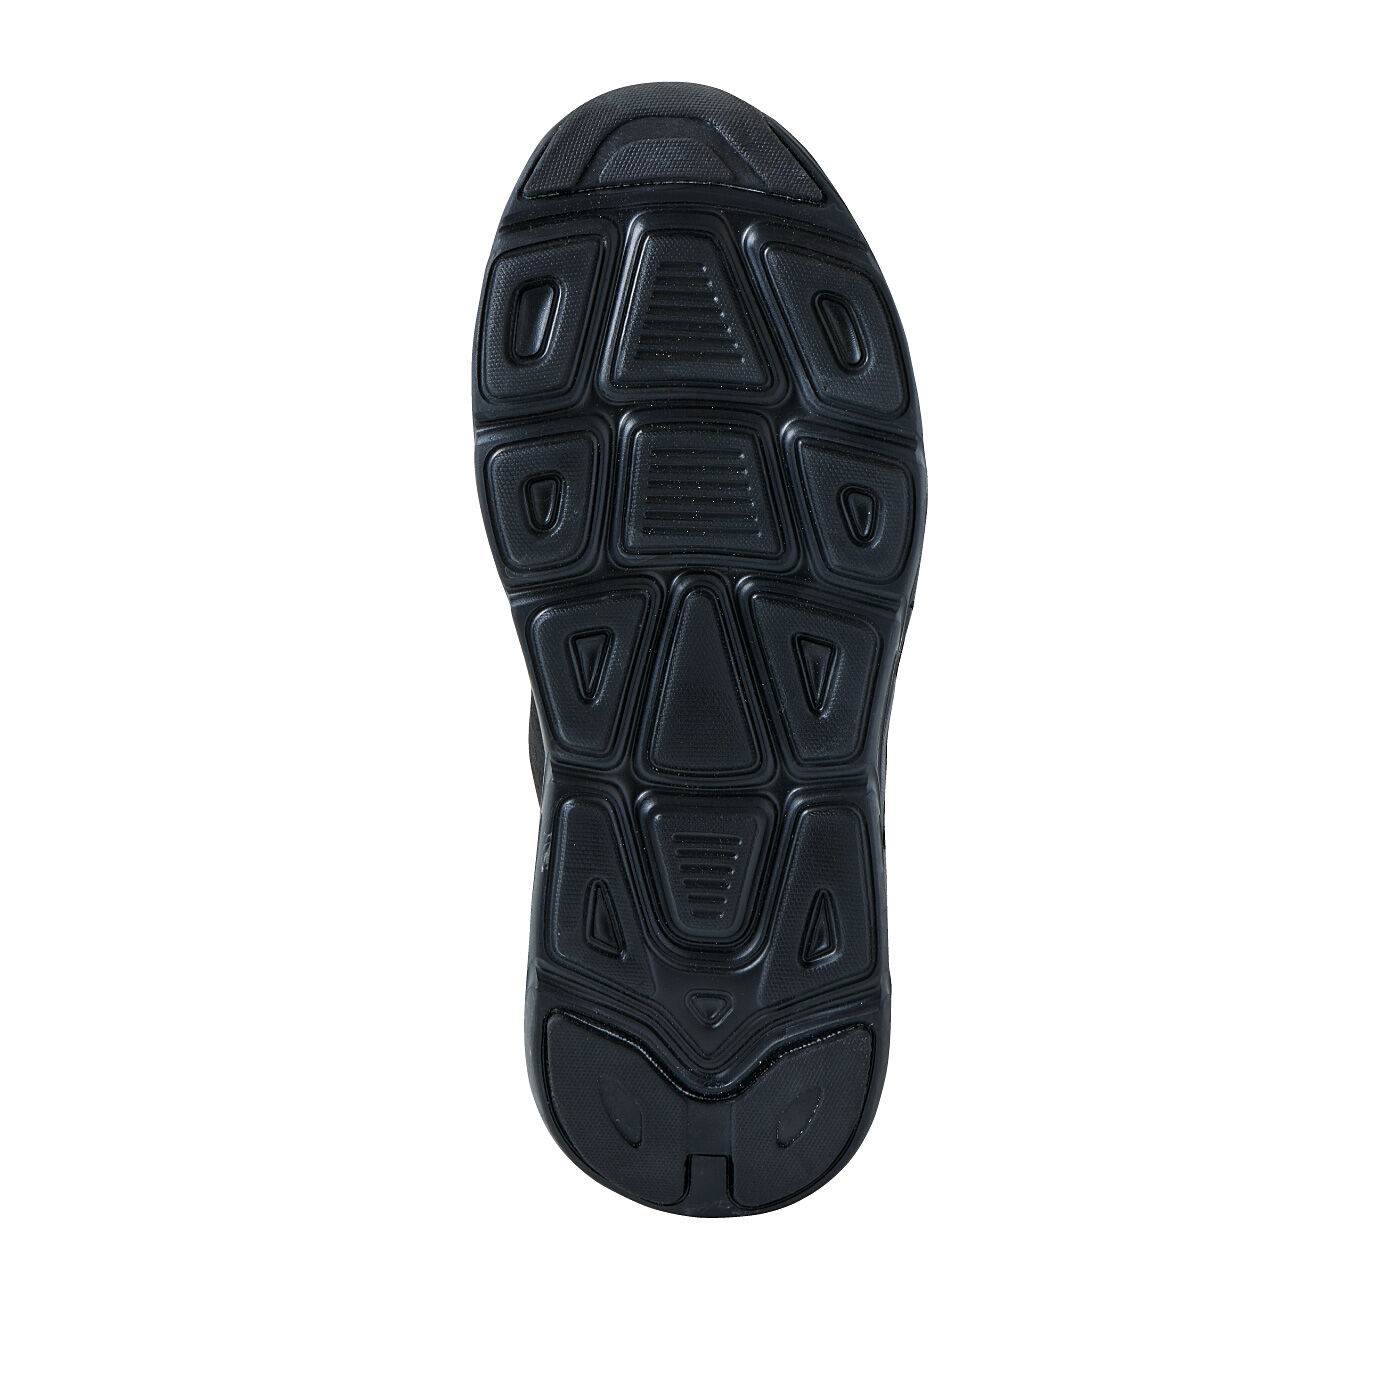 L'AMIPLUS|ラミプリュス　内側ボア素材であったか　スニーカー気分のスエード調ブーツ〈アーニー・アーノルドパーマー〉〈ブラック〉|アウトソール　スニーカーのような靴底で歩きやすい。